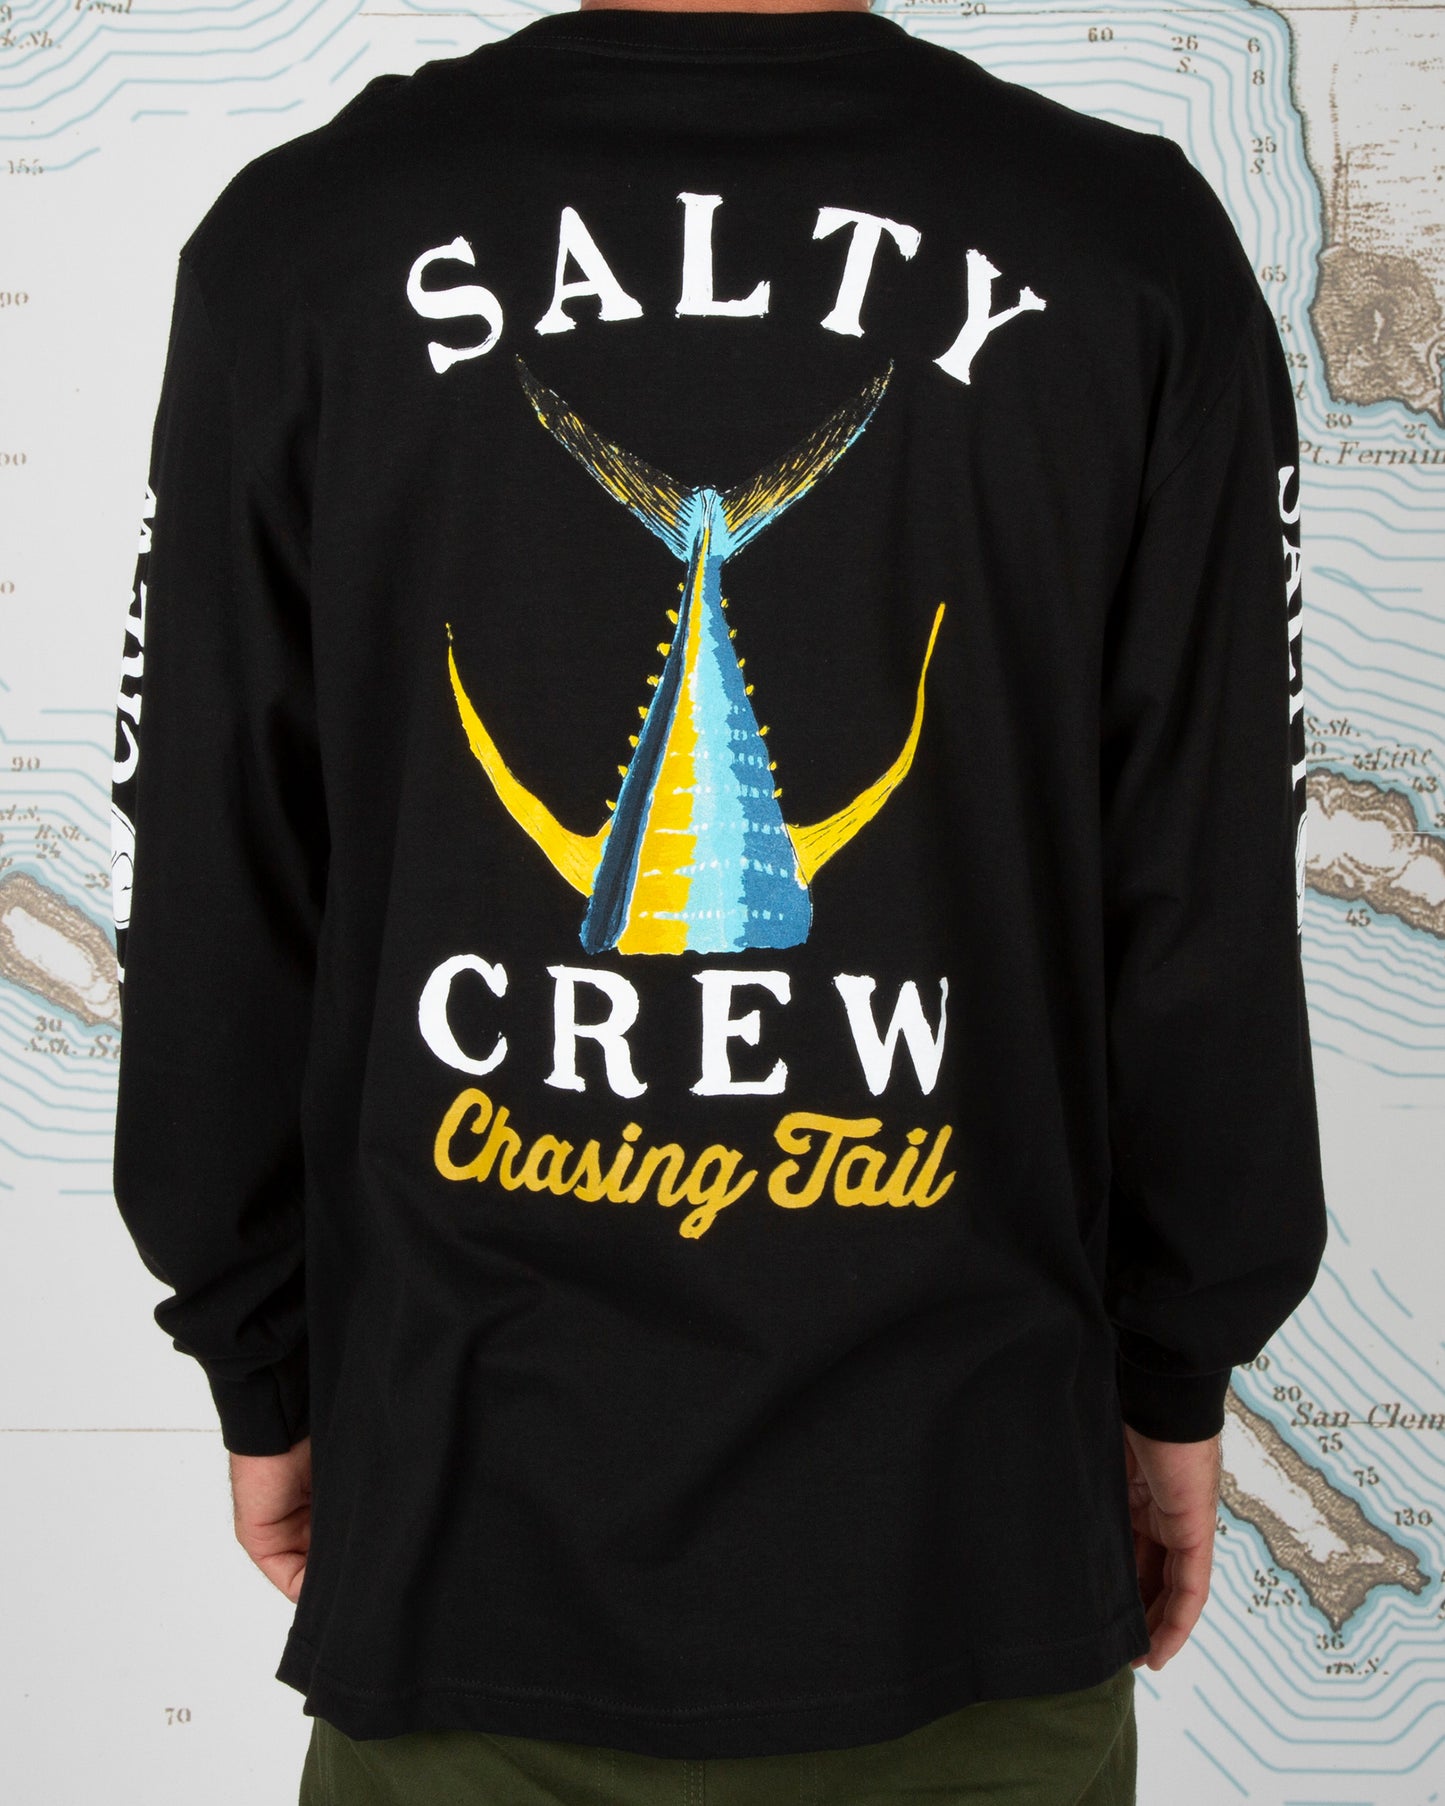 Salty Crew Men - Tailed Black Standard L/S Tee